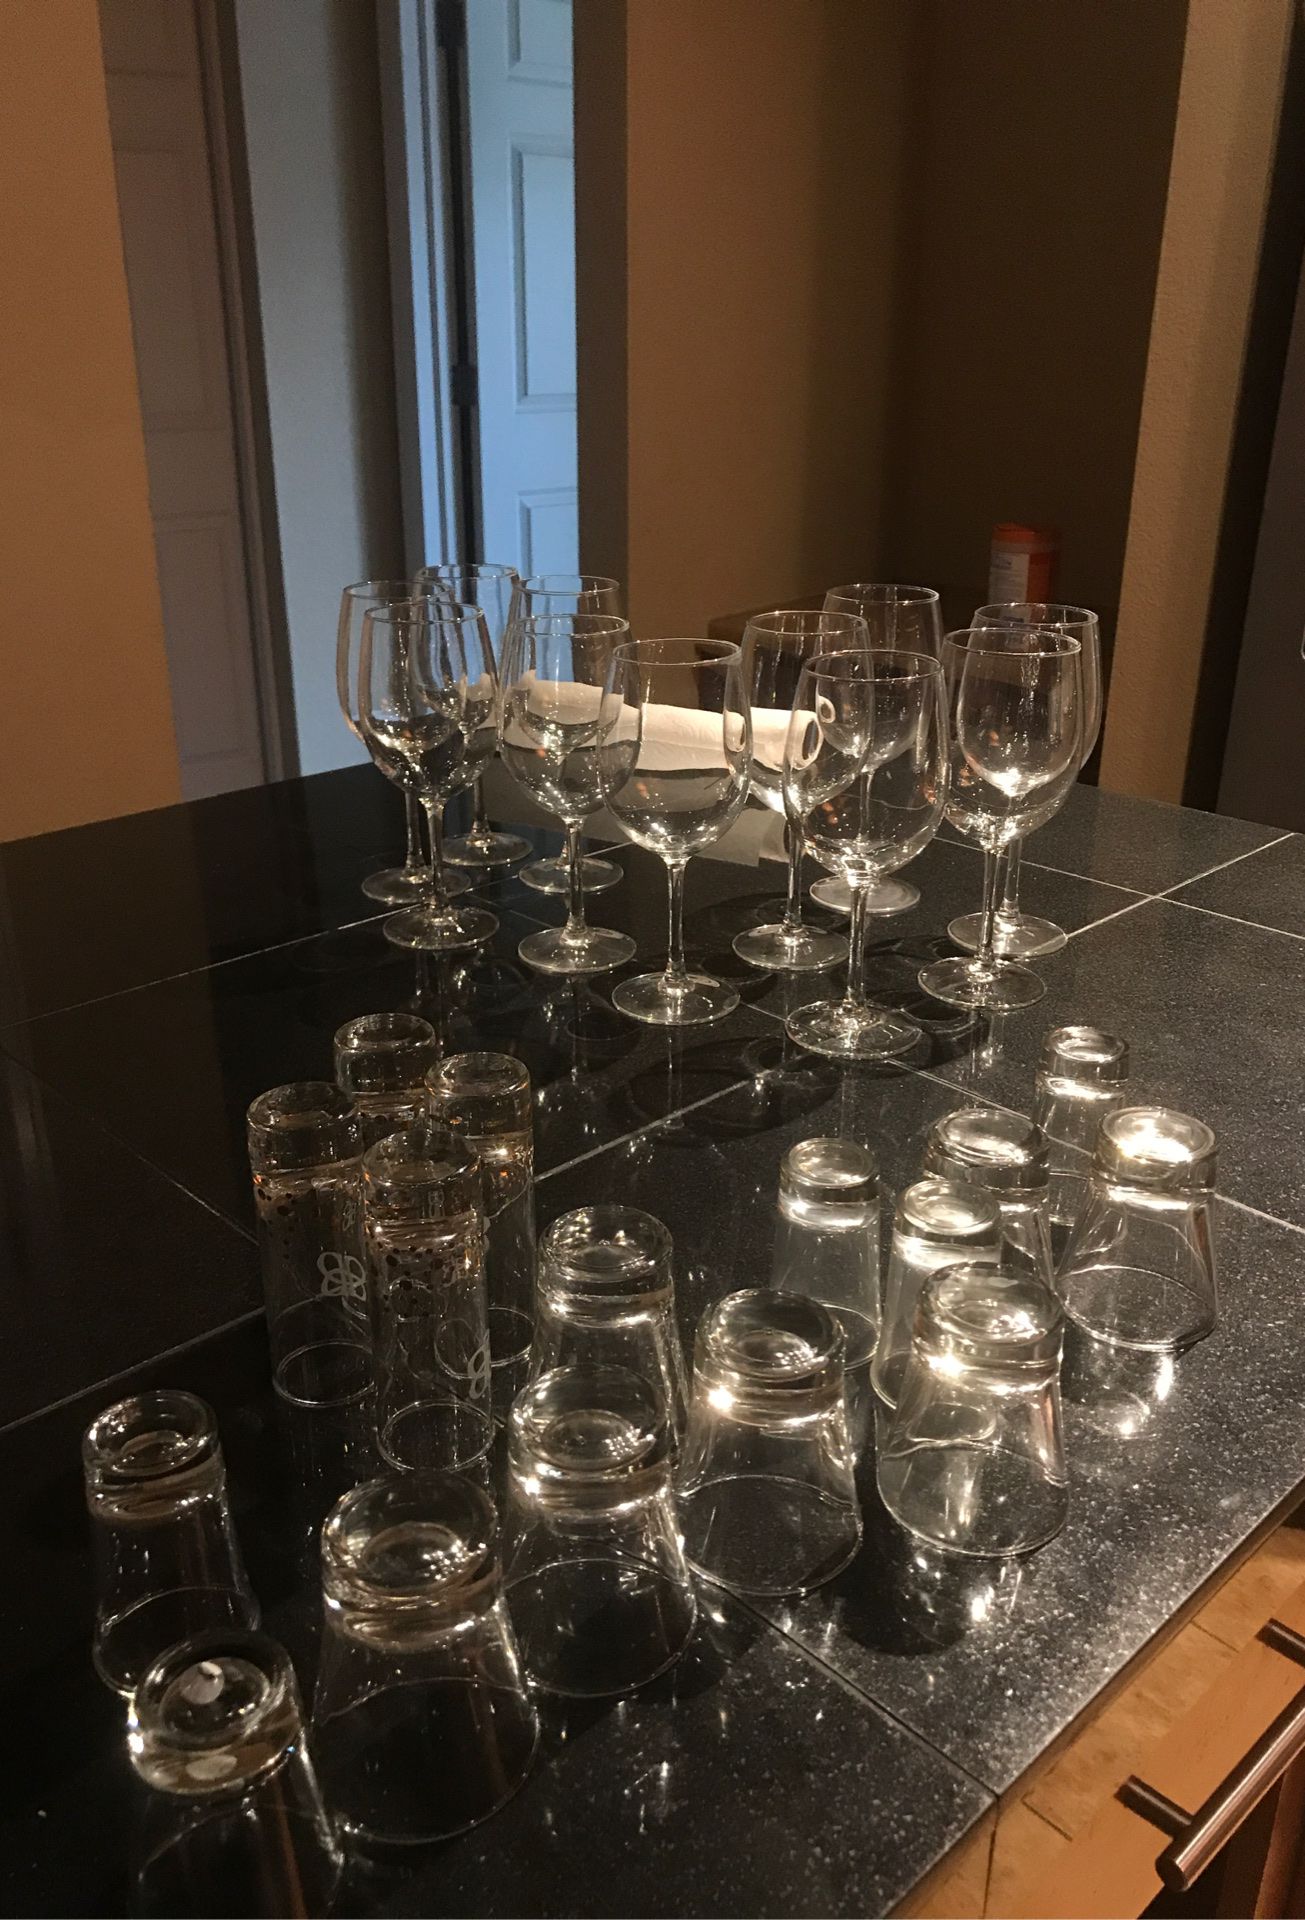 Free wine glasses and shot glasses